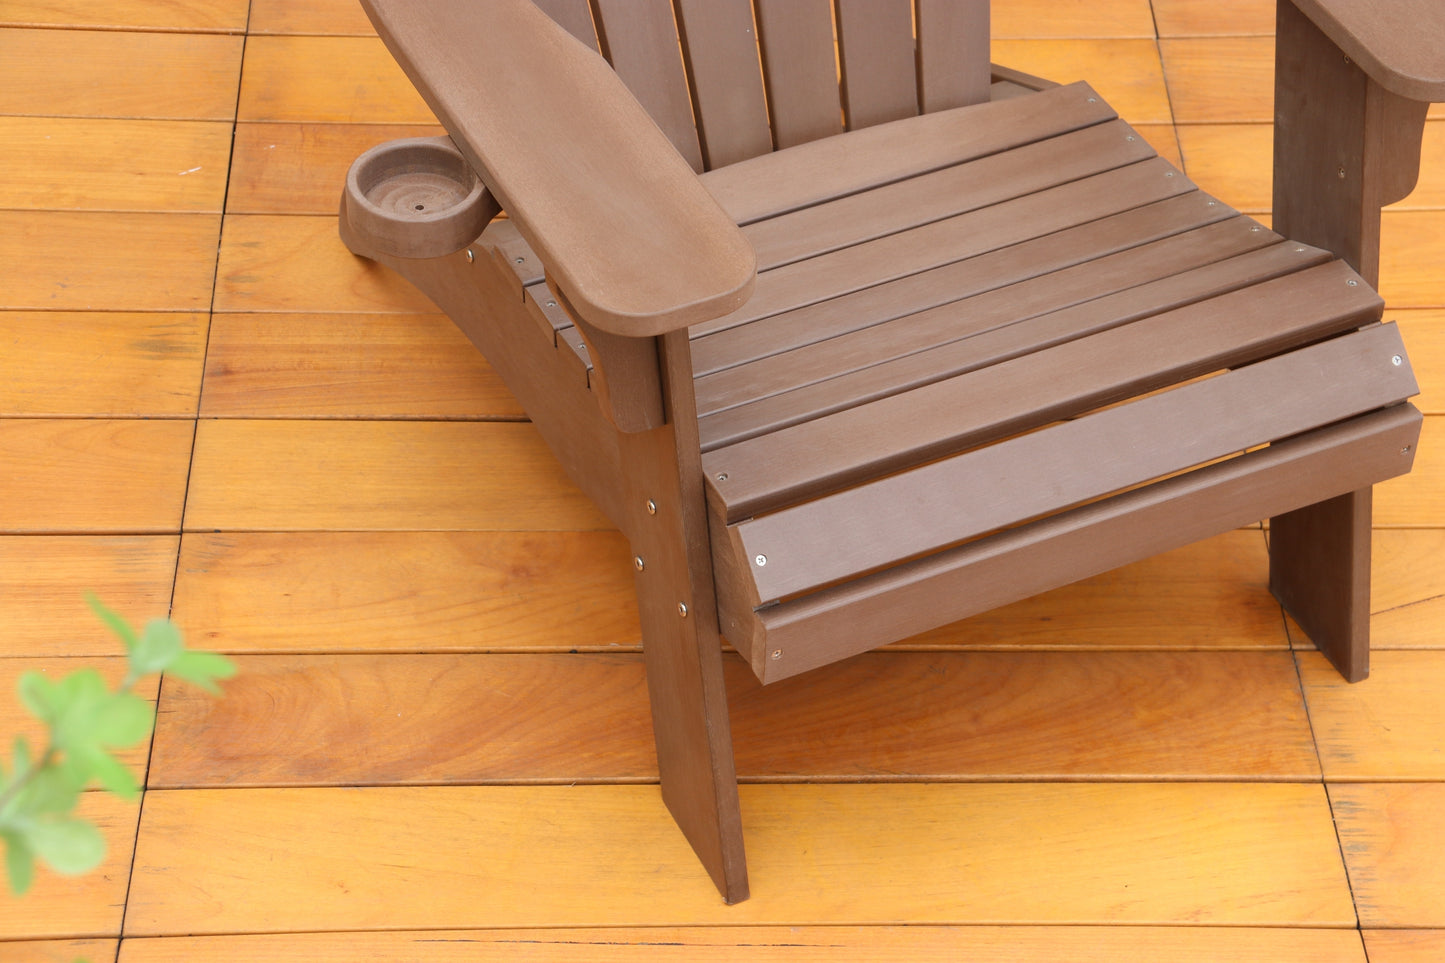 Polystyrene Adirondack Chair - Brown